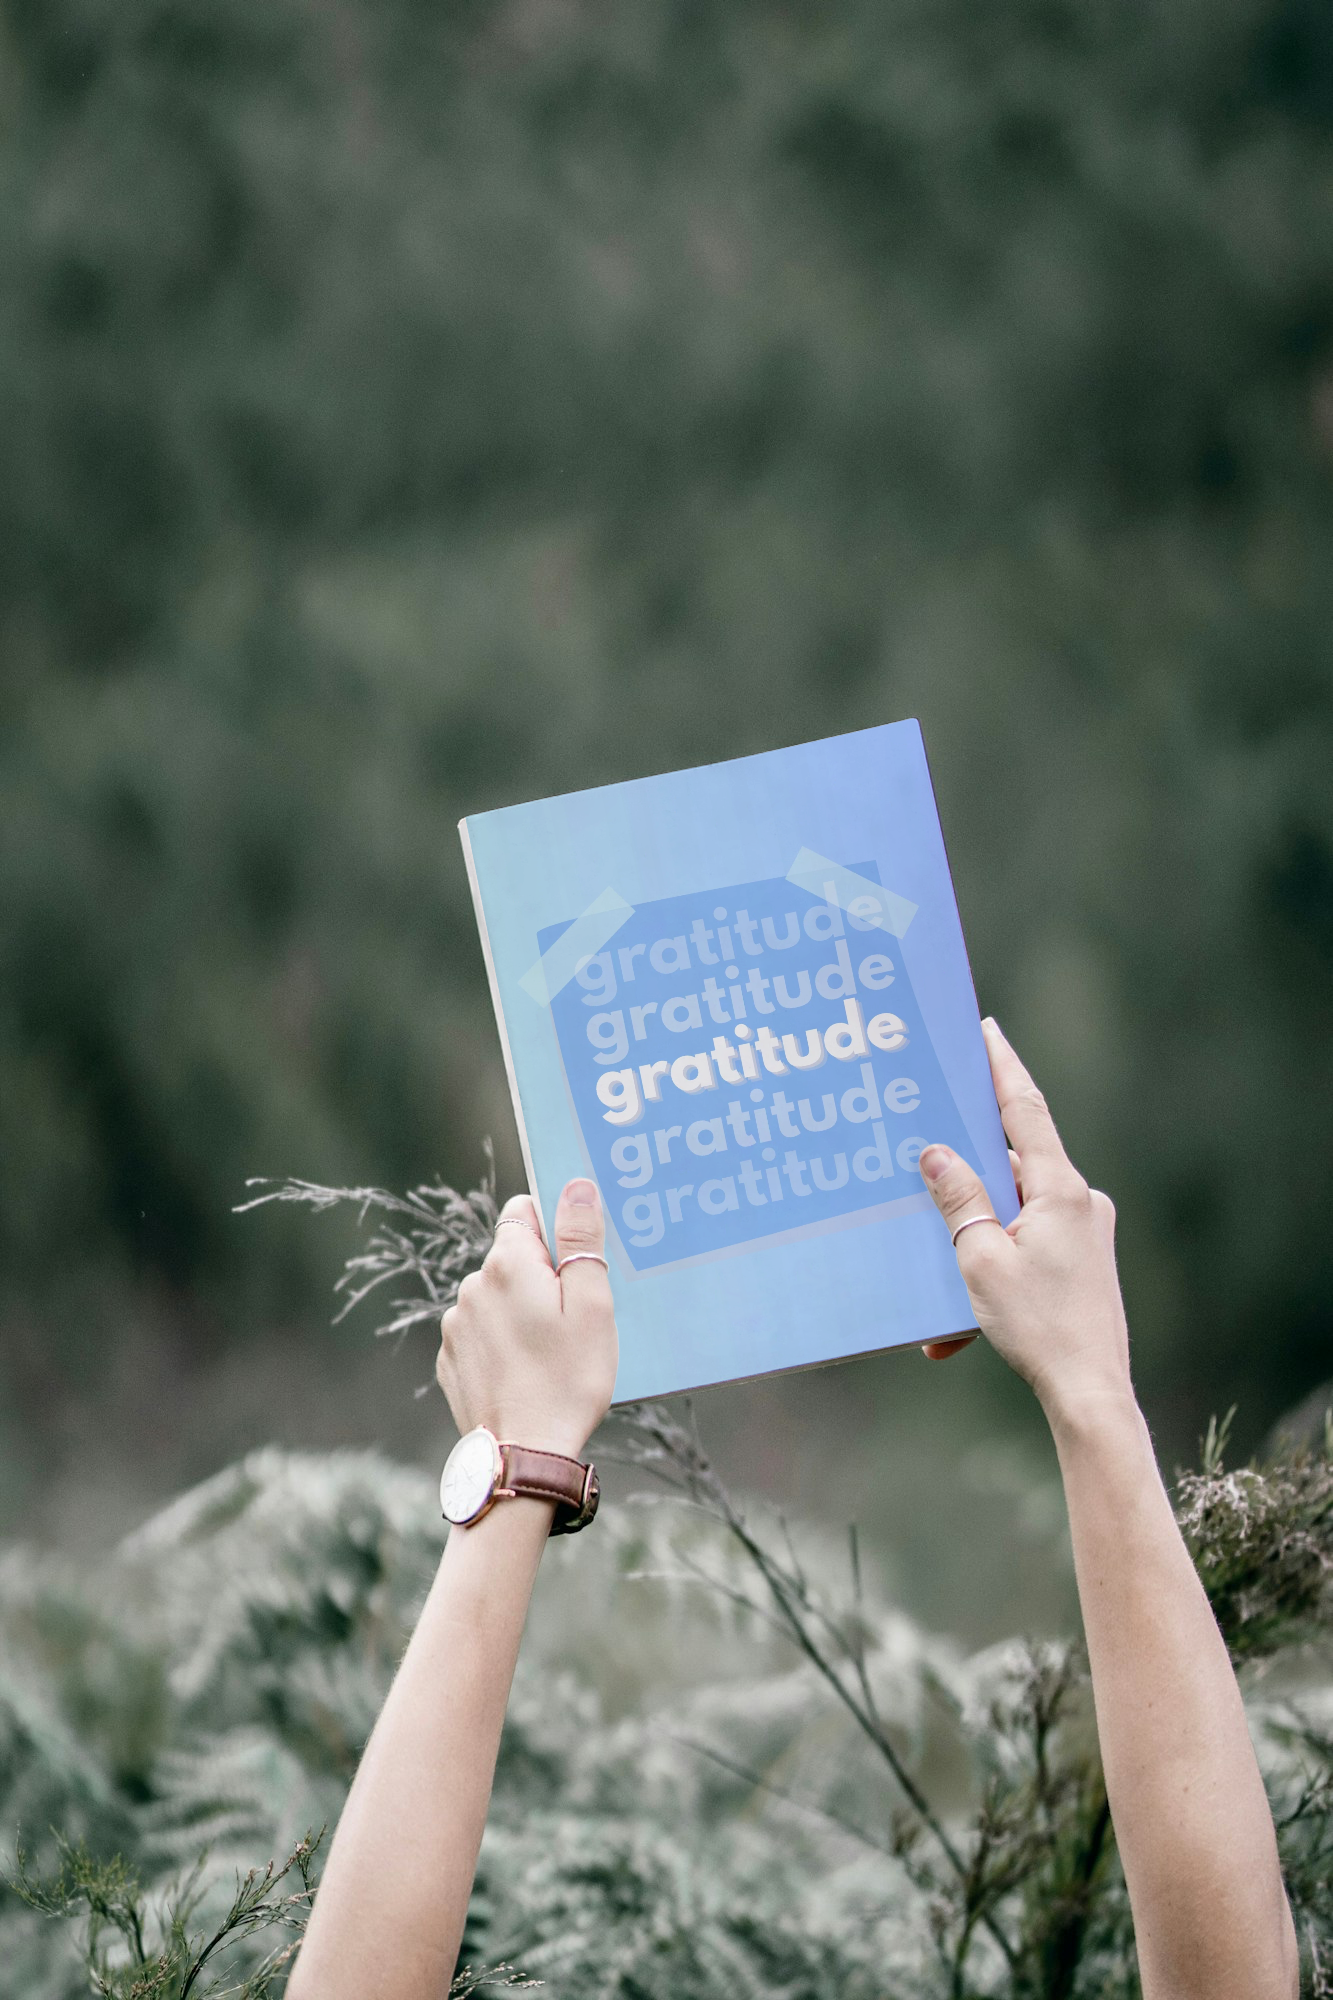 Gratitude Journal 5 Minutes a Day to Develop Gratitude,Mindfulness